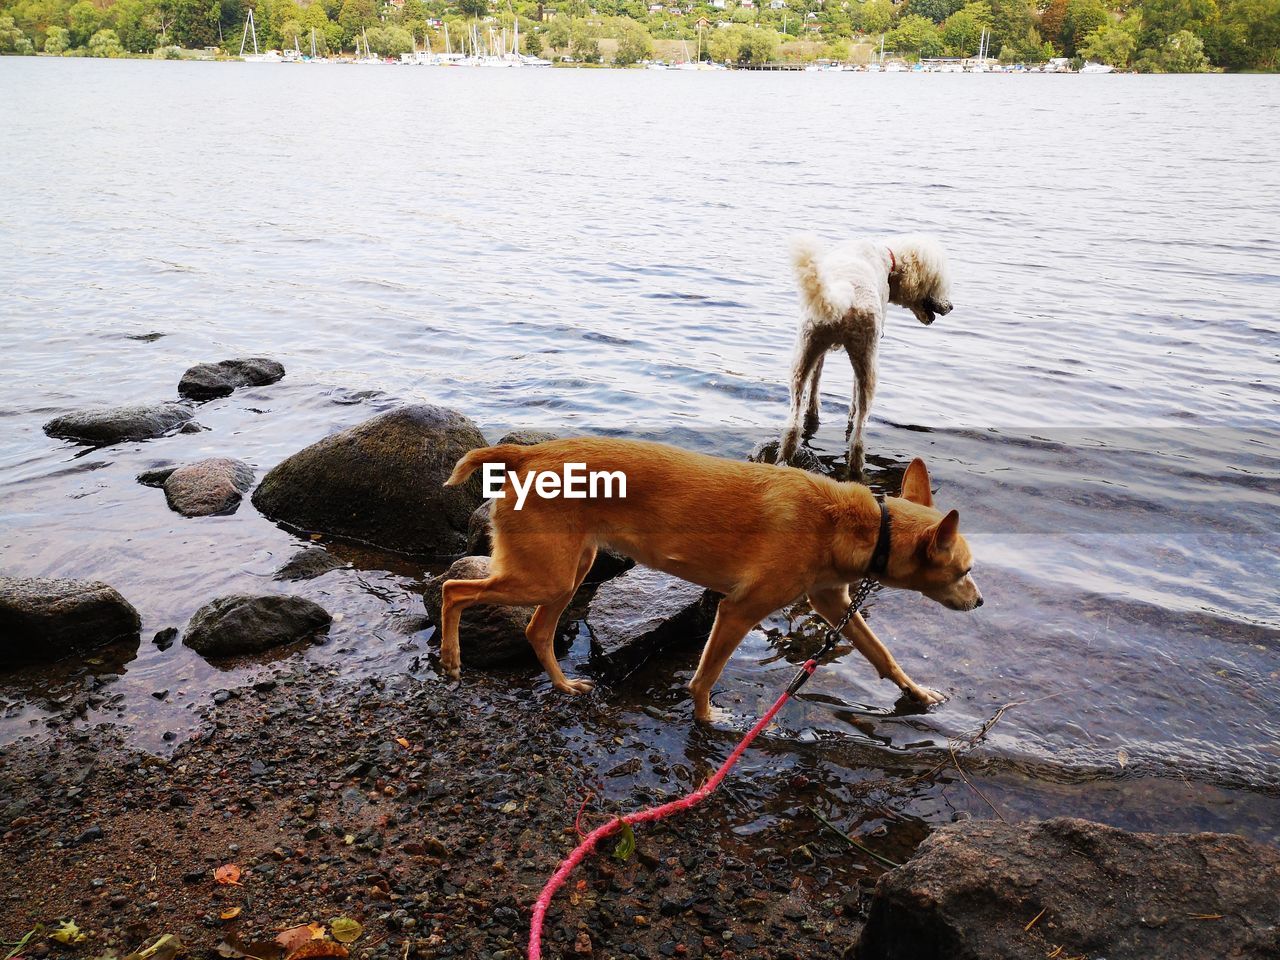 Dog drinking water at lakeshore